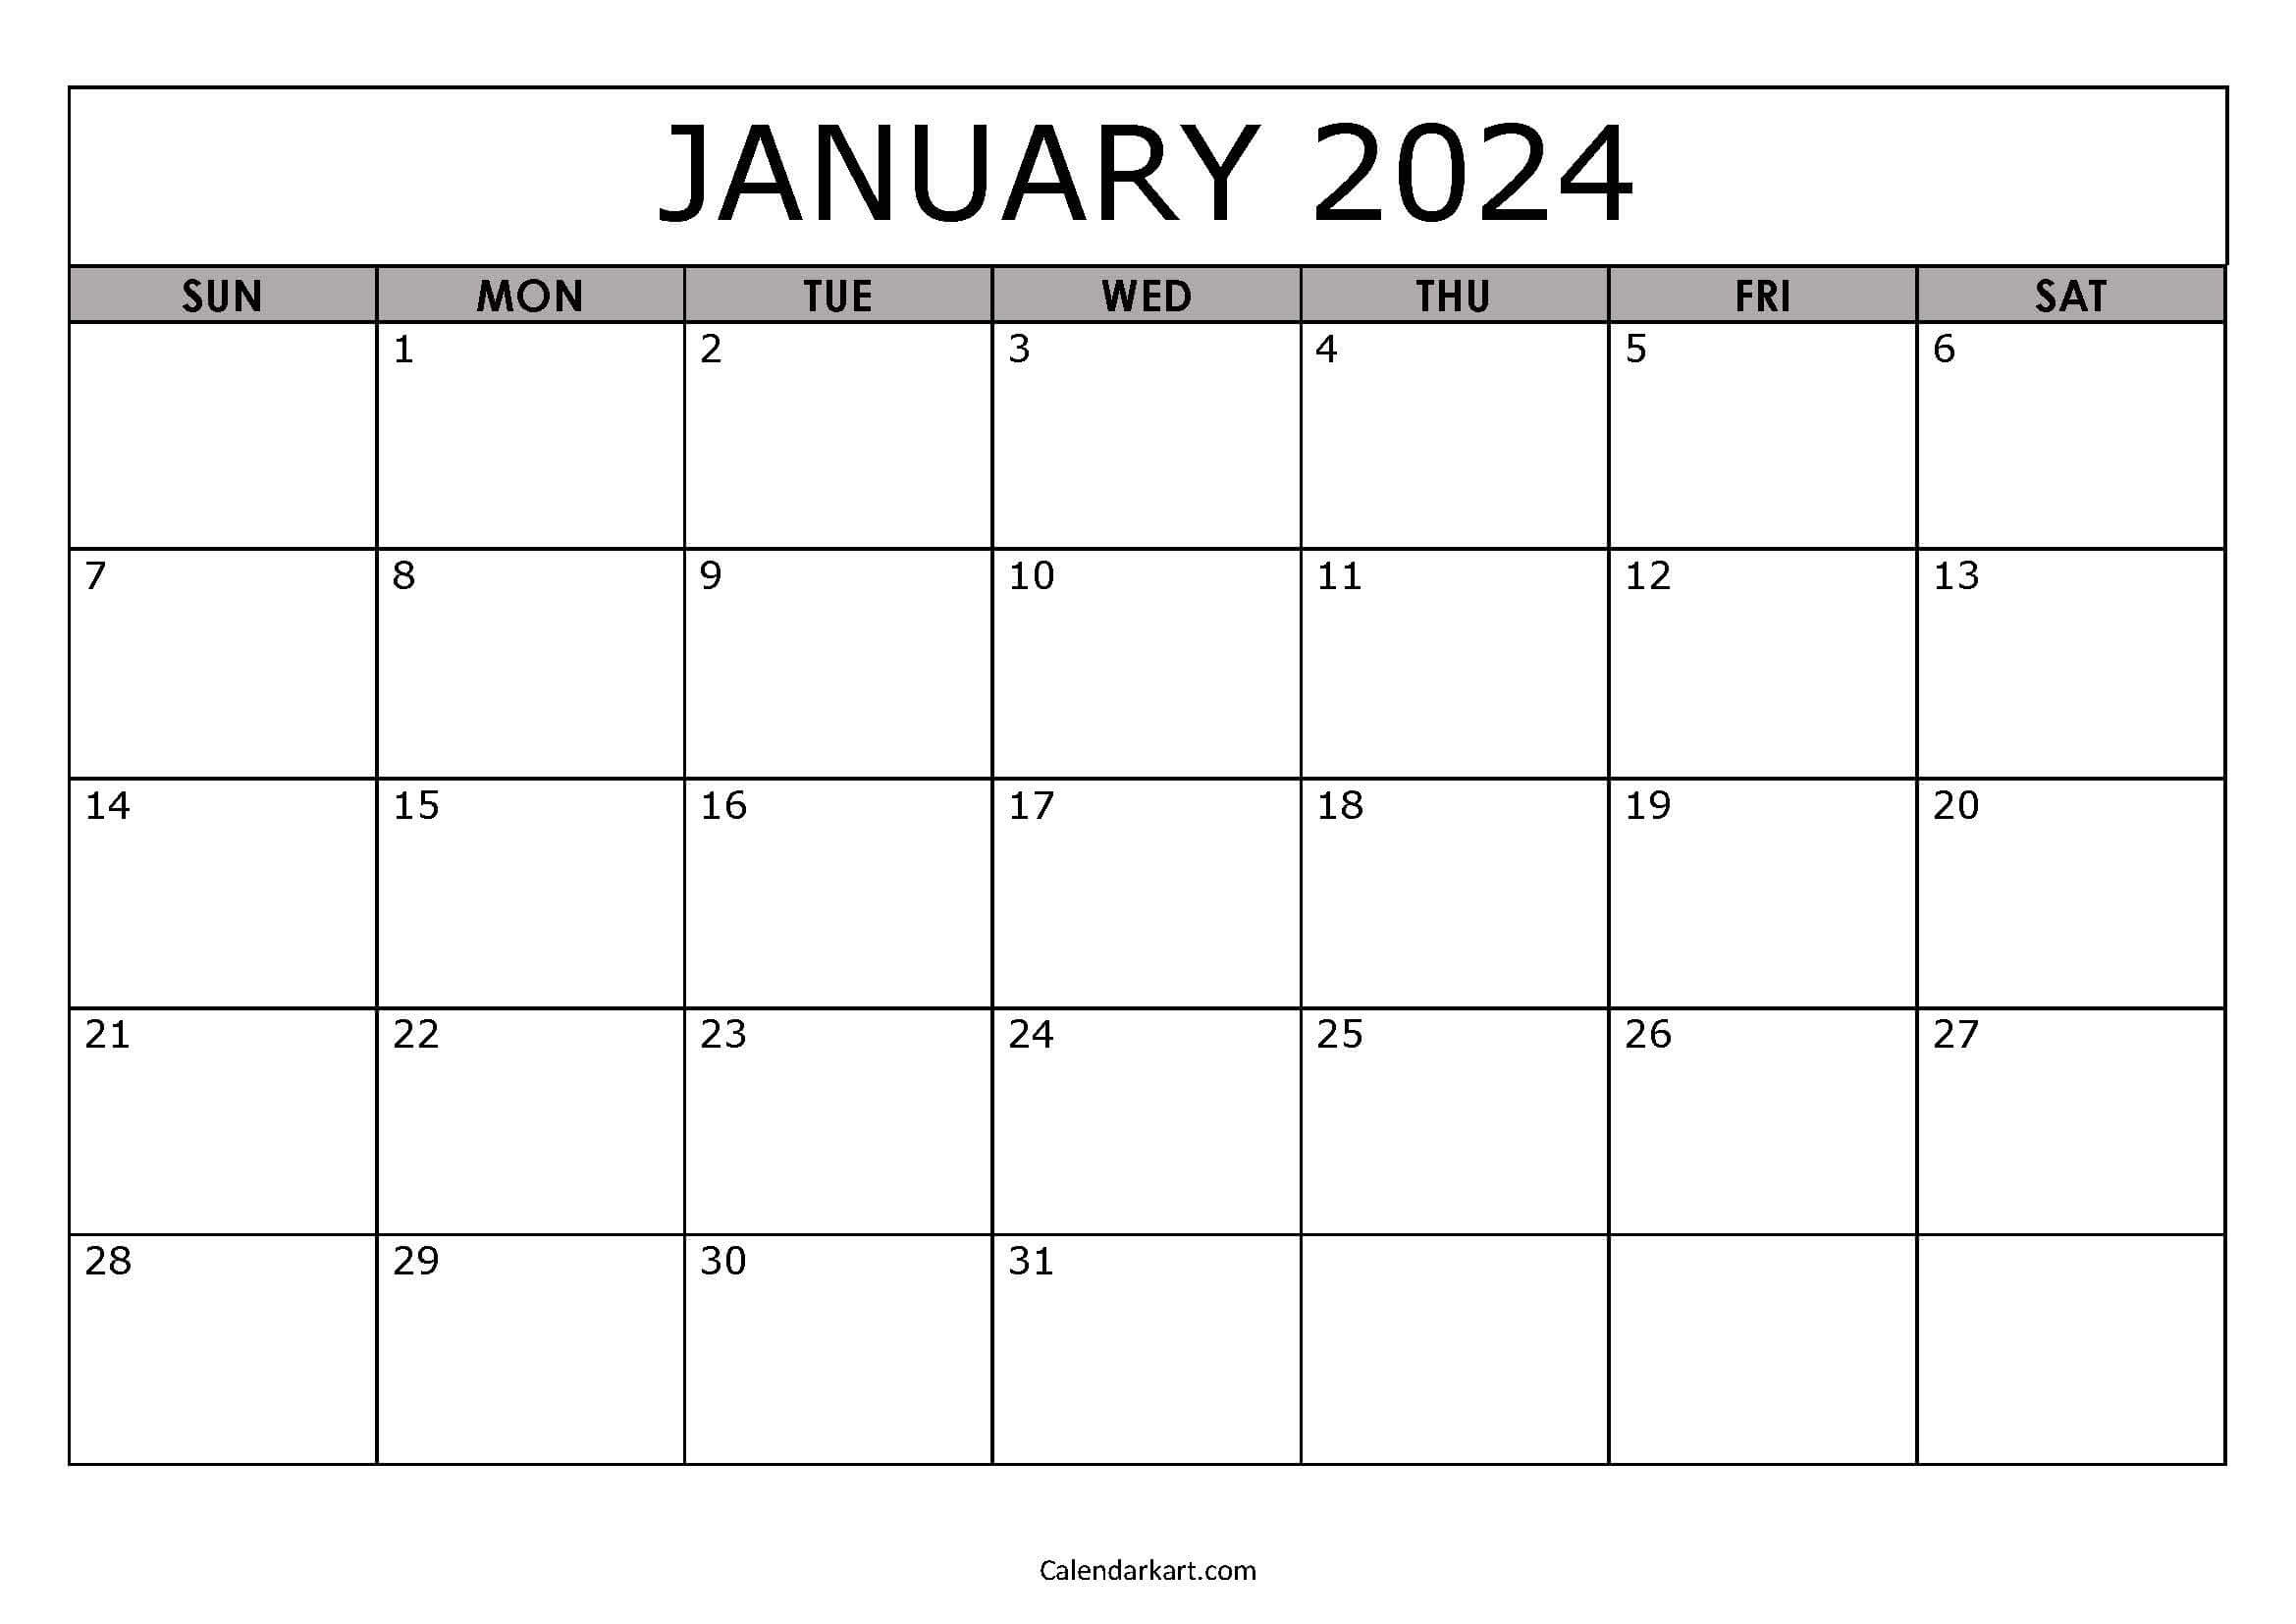 Free Printable January 2024 Calendars - Calendarkart inside Free Printable Calendar 2024 Monday Star